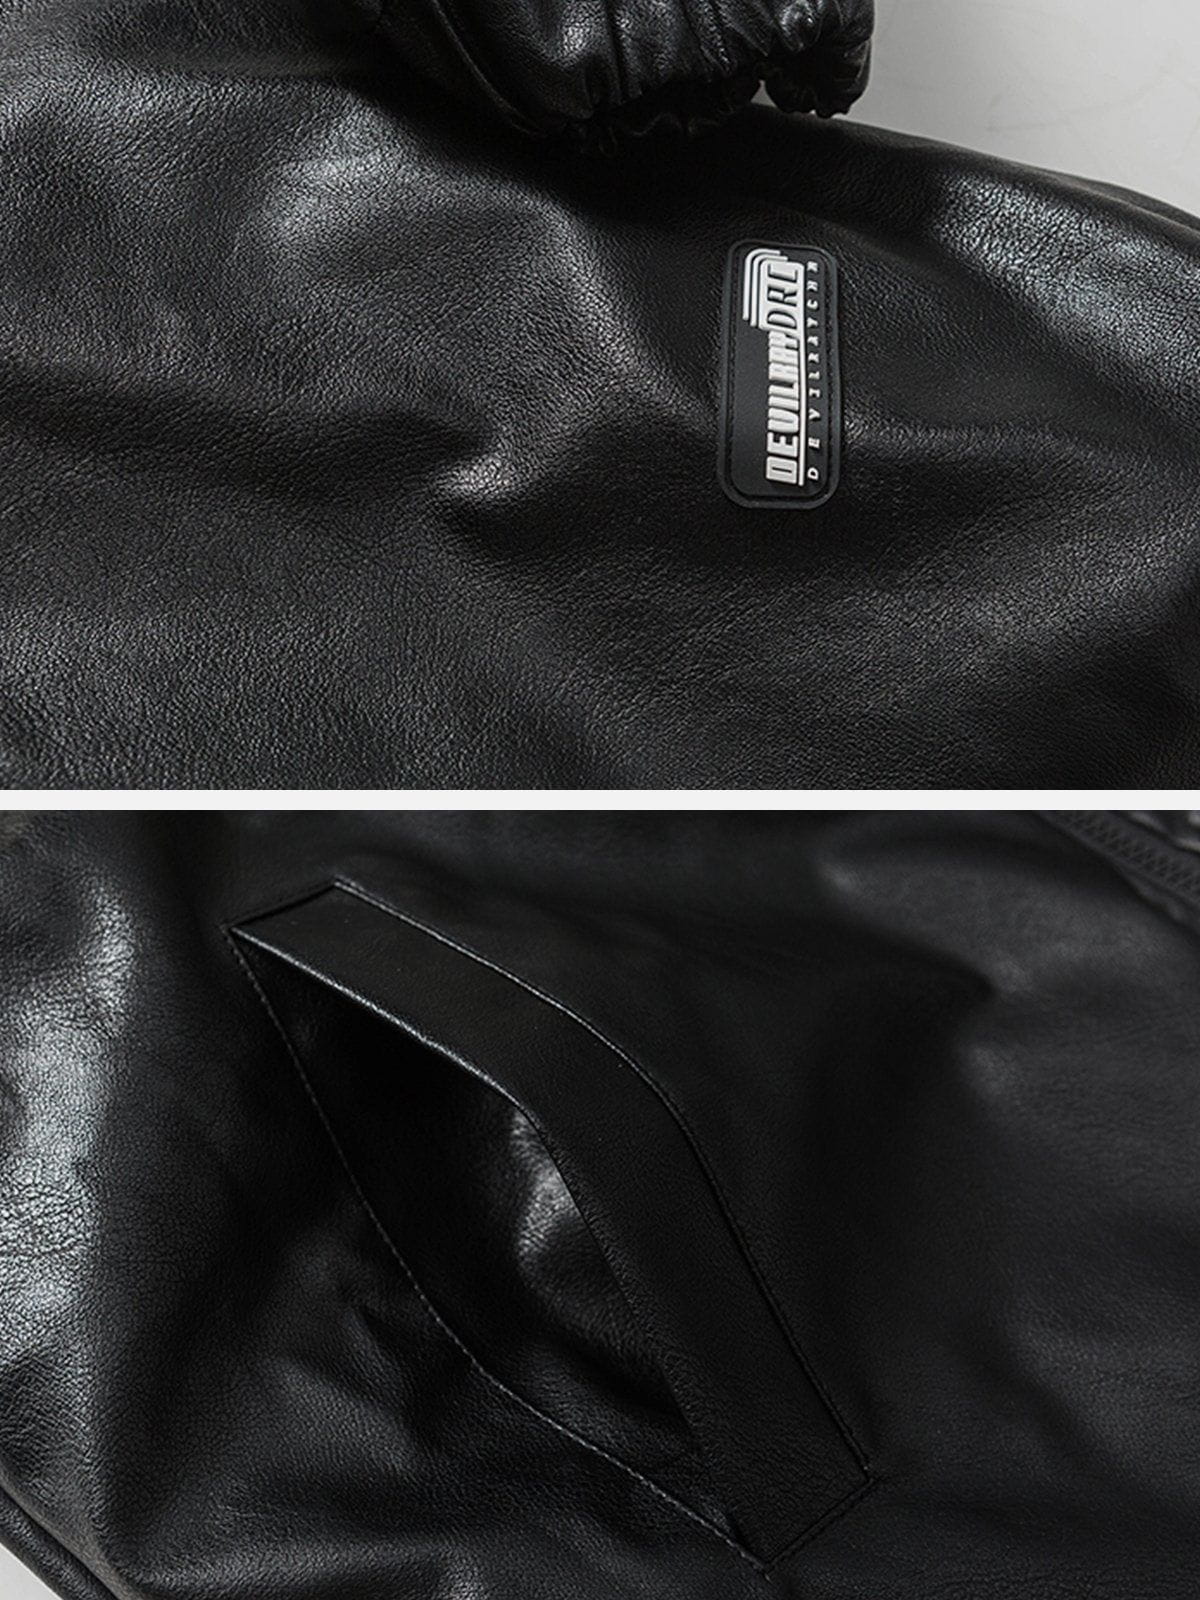 Majesda® - Patchwork Zipper Leather Winter Coat outfit ideas, streetwear fashion - majesda.com